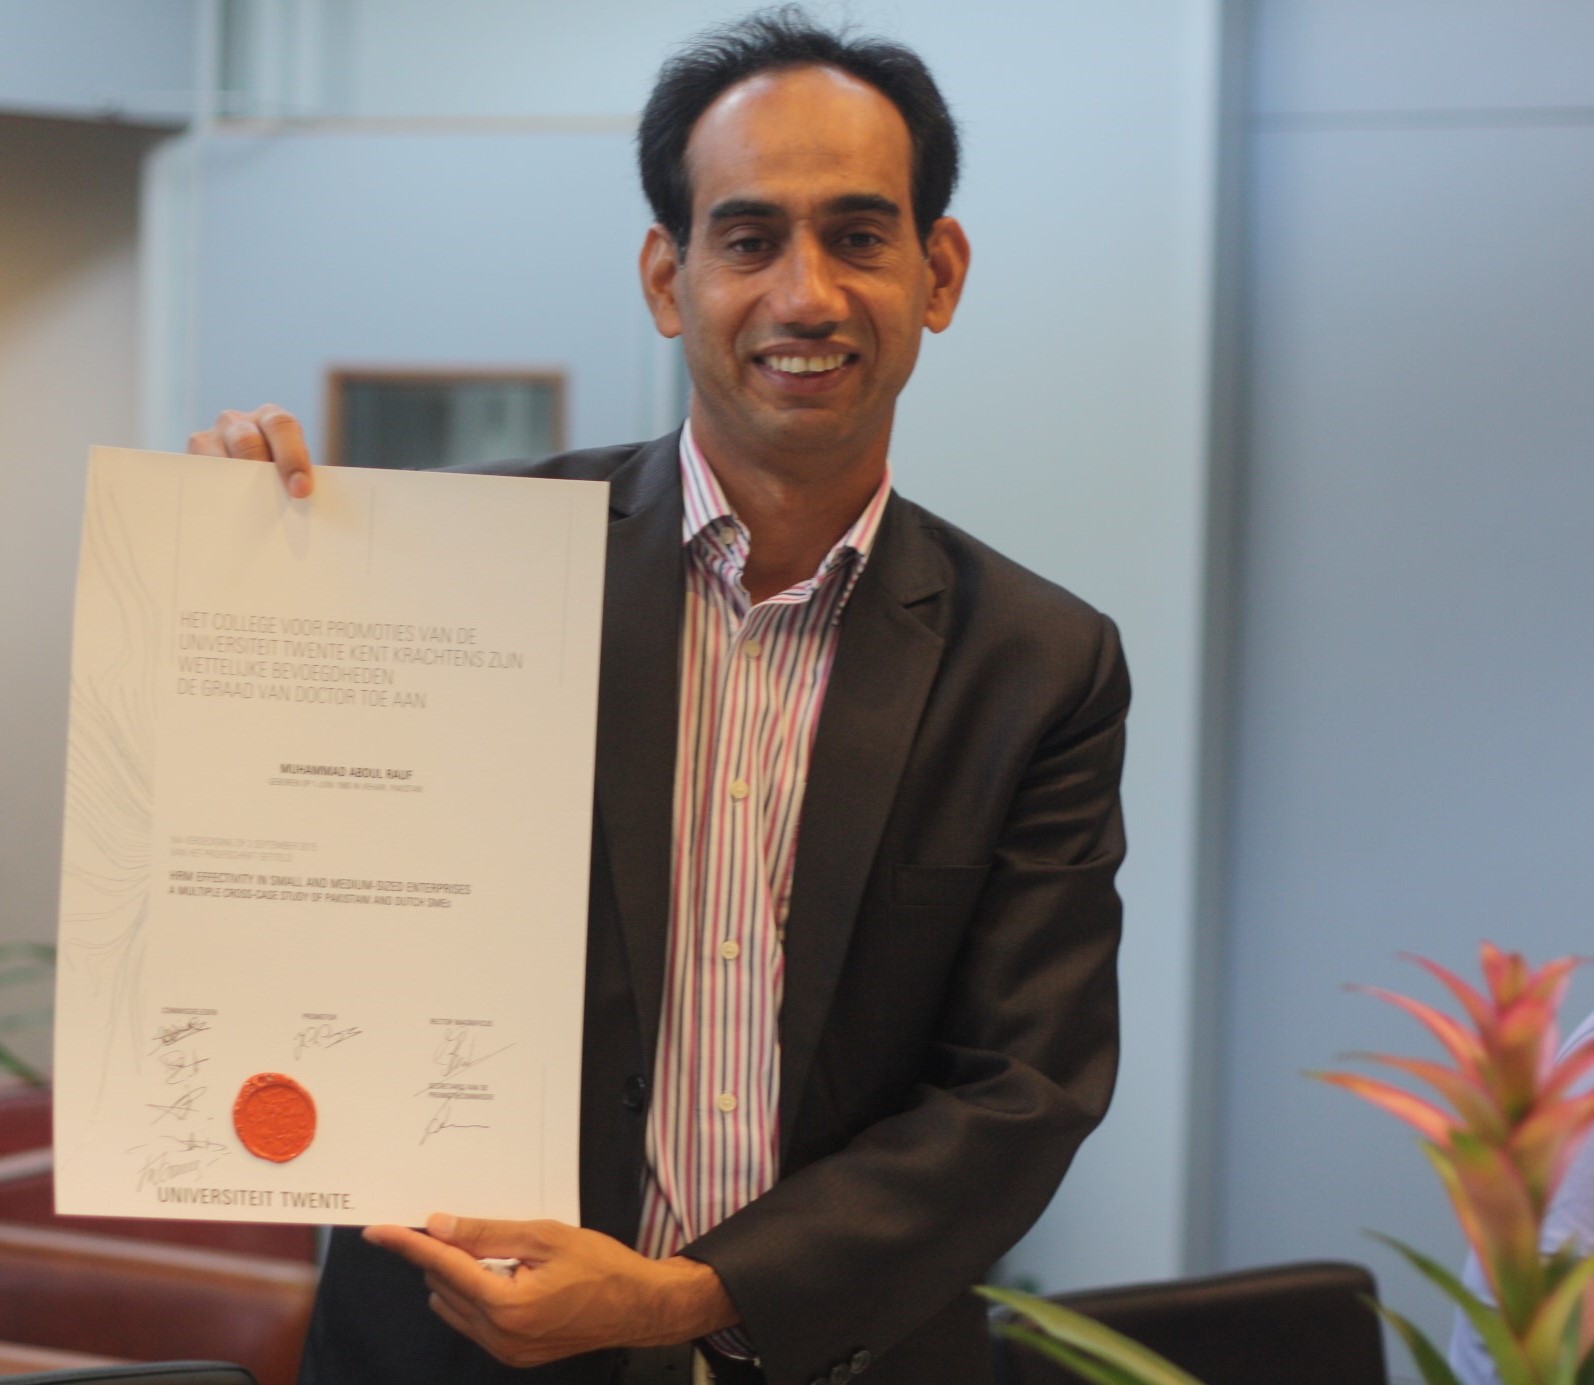 Wittenborg Senior Lecturer, Dr Abdul Rauf, Nominated for Prestigious HRM Award after PhD Dissertation